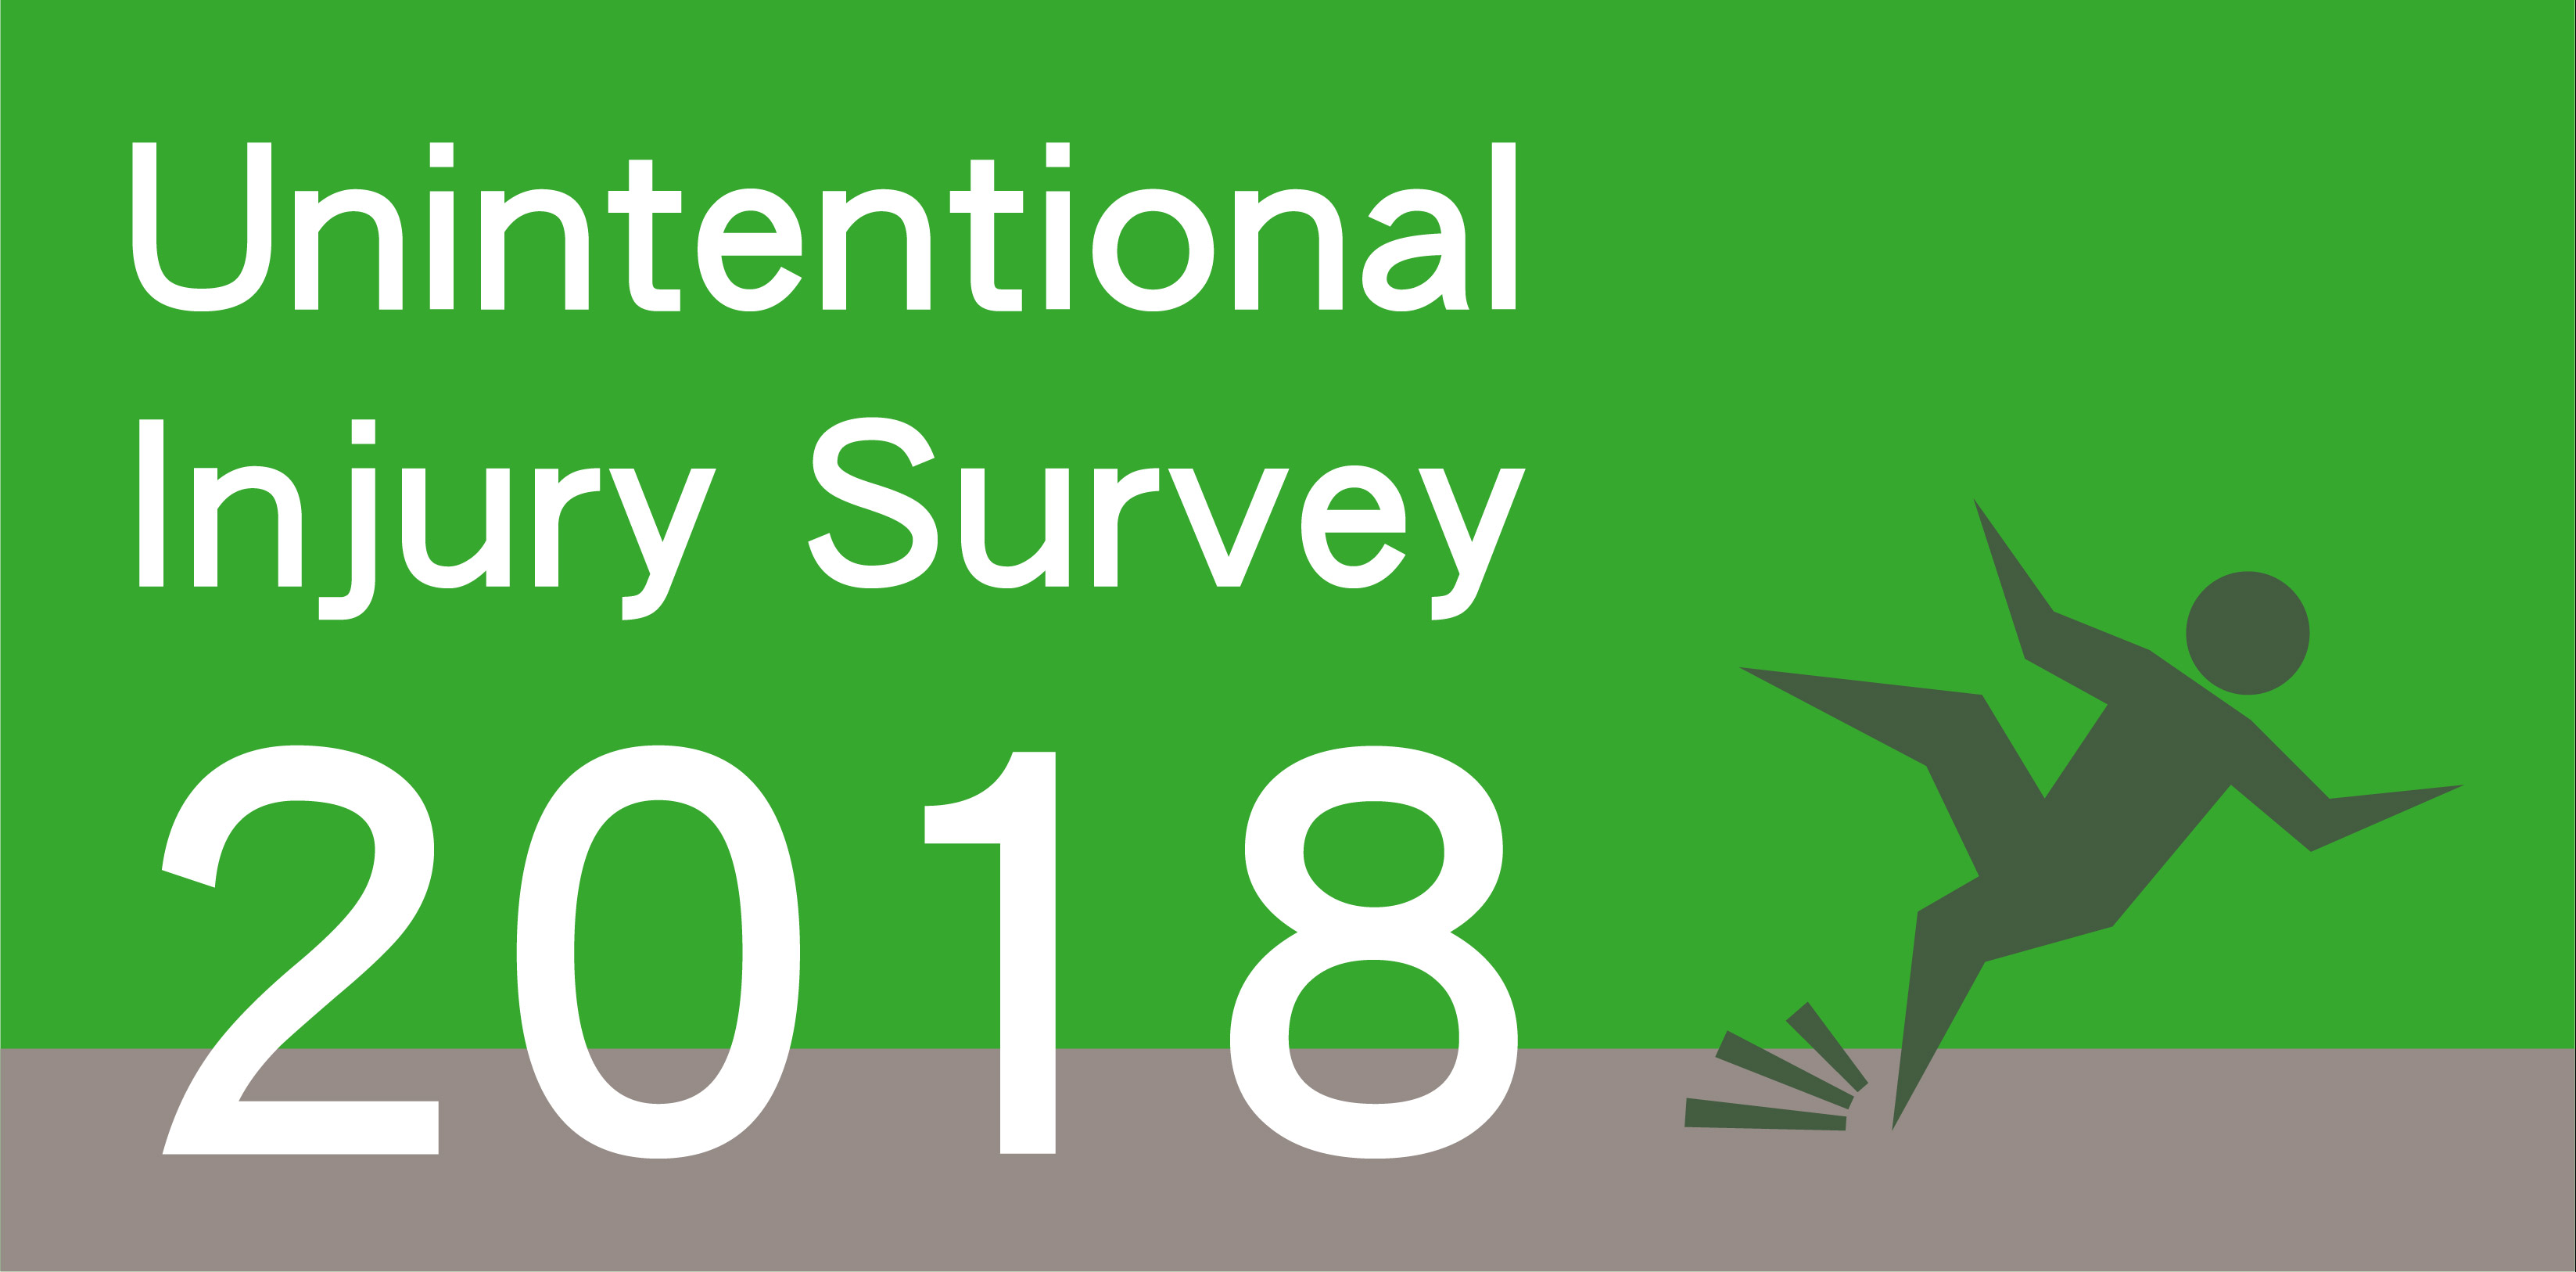 Unintentional Injury Survey 2018